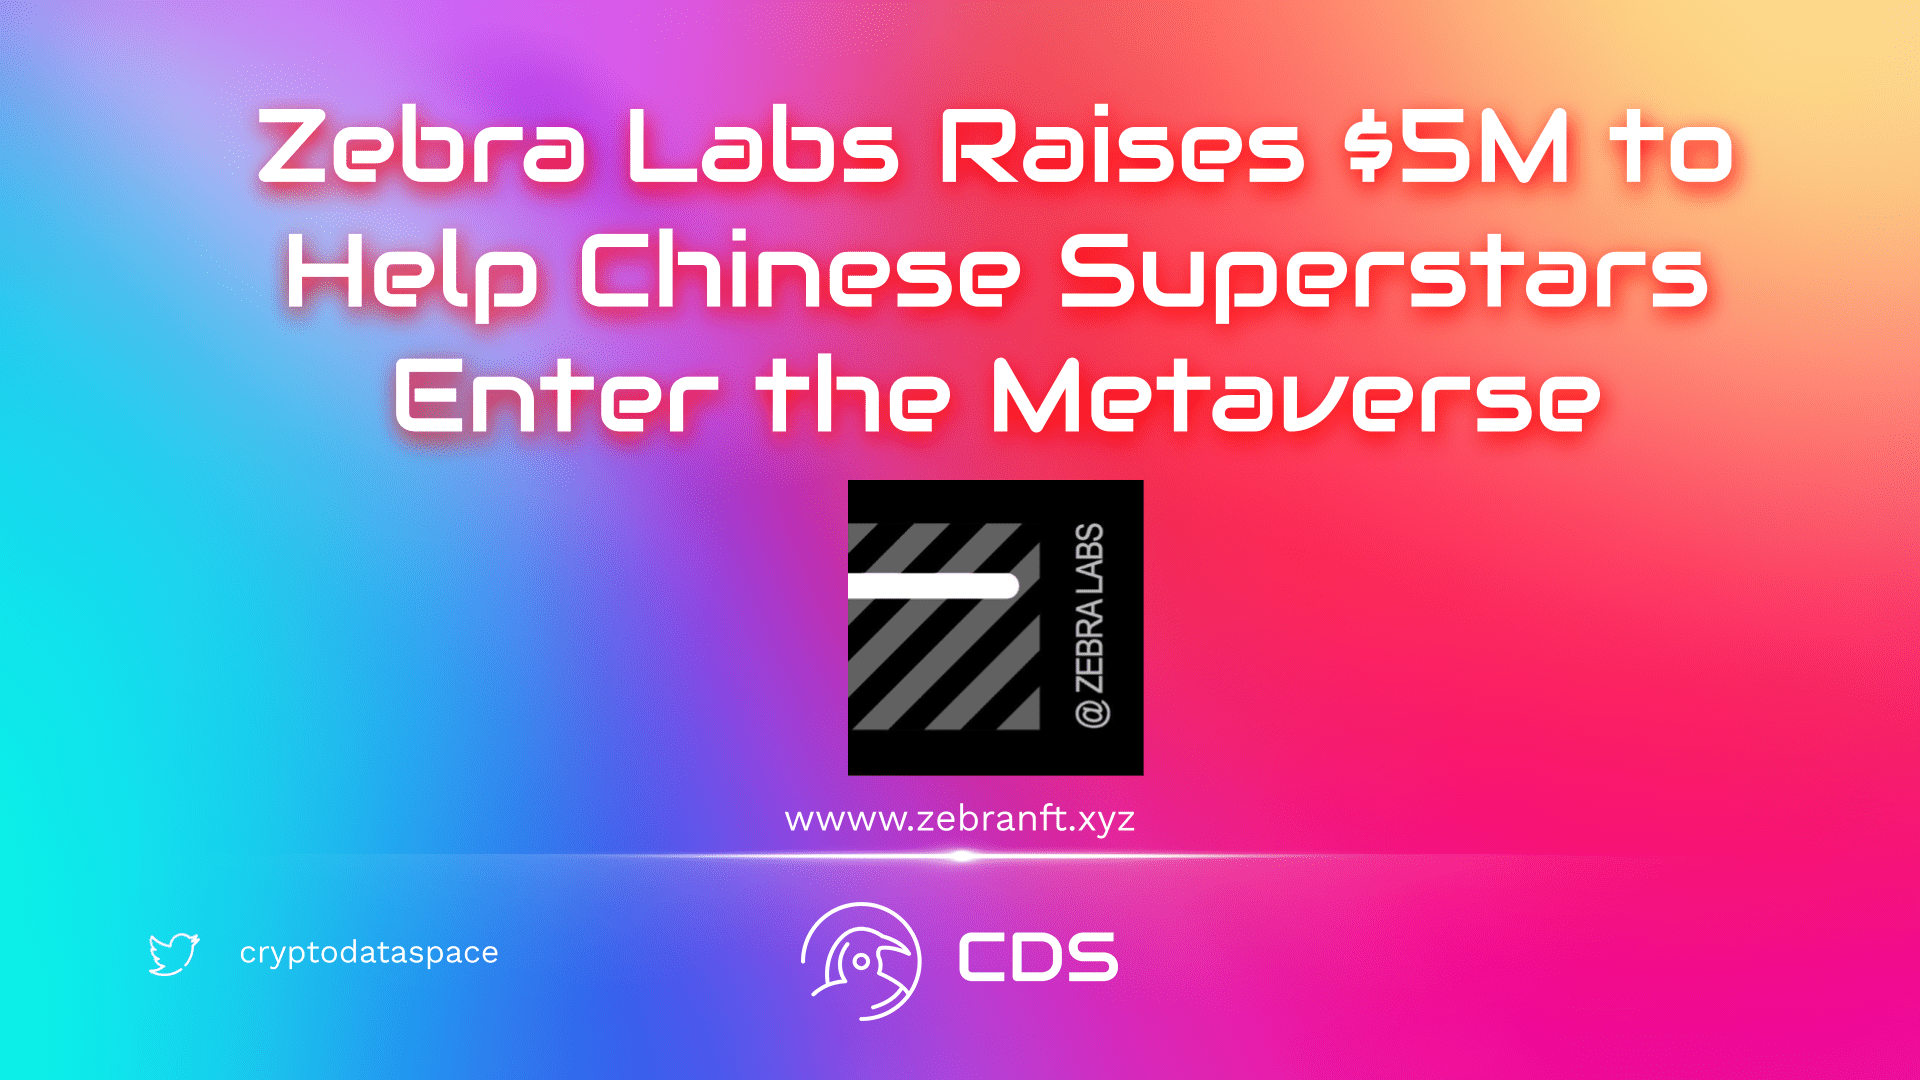 Zebra Labs Raises $5M to Help Chinese Superstars Enter the Metaverse